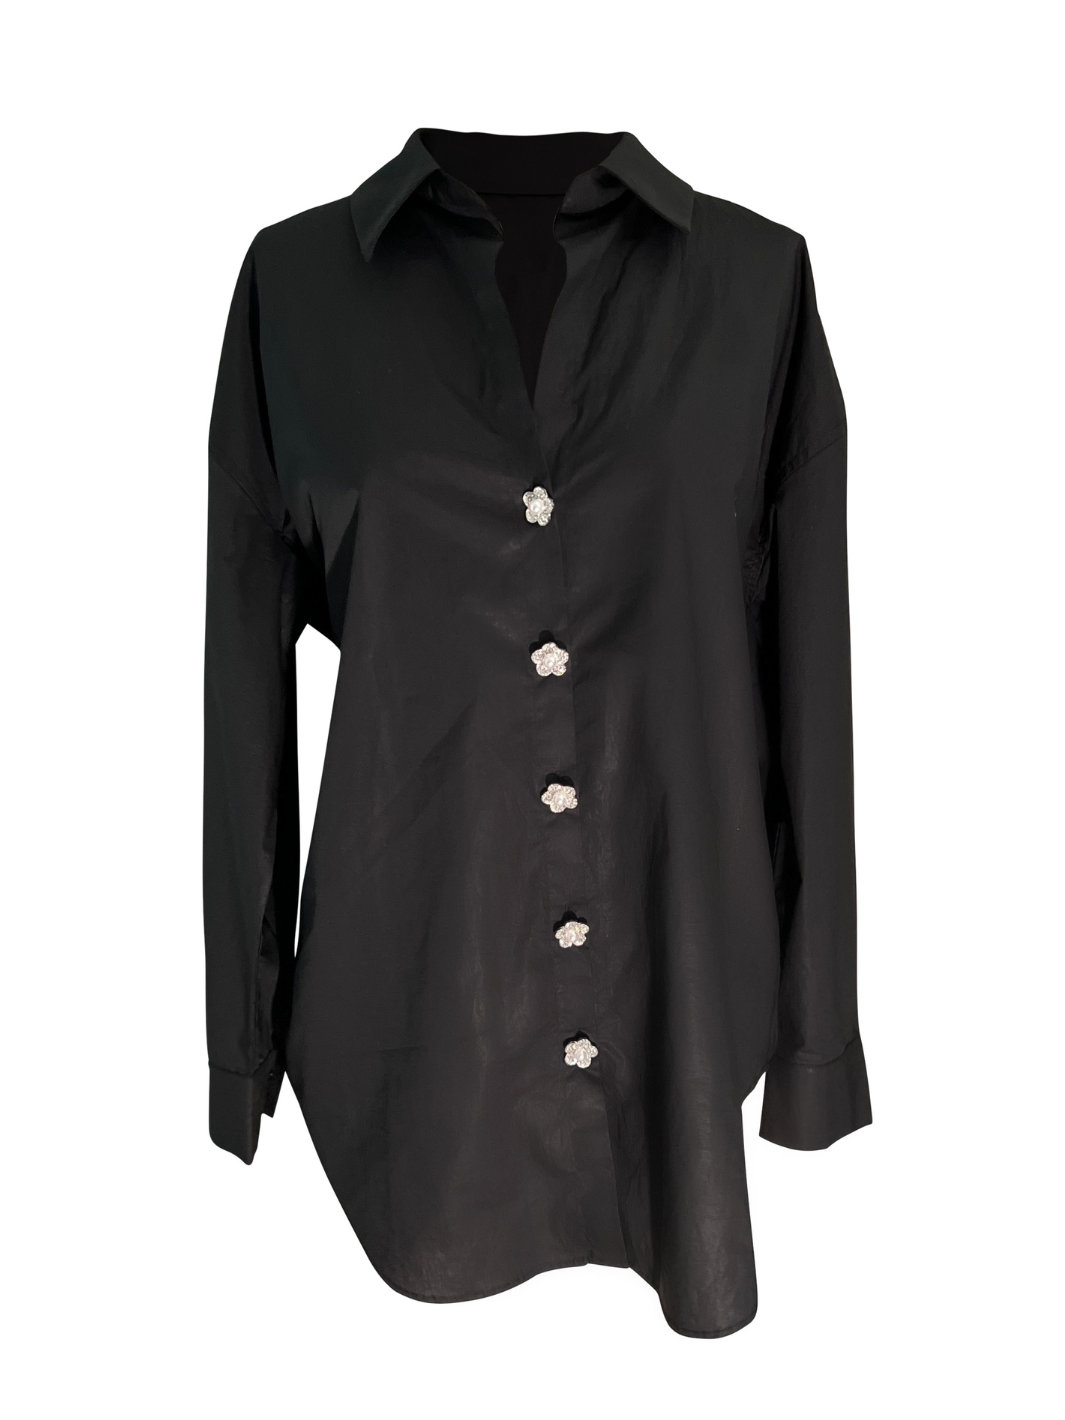 Black Feminine Oversized Blouse: Transform Your Wardrobe with 1 Shirt